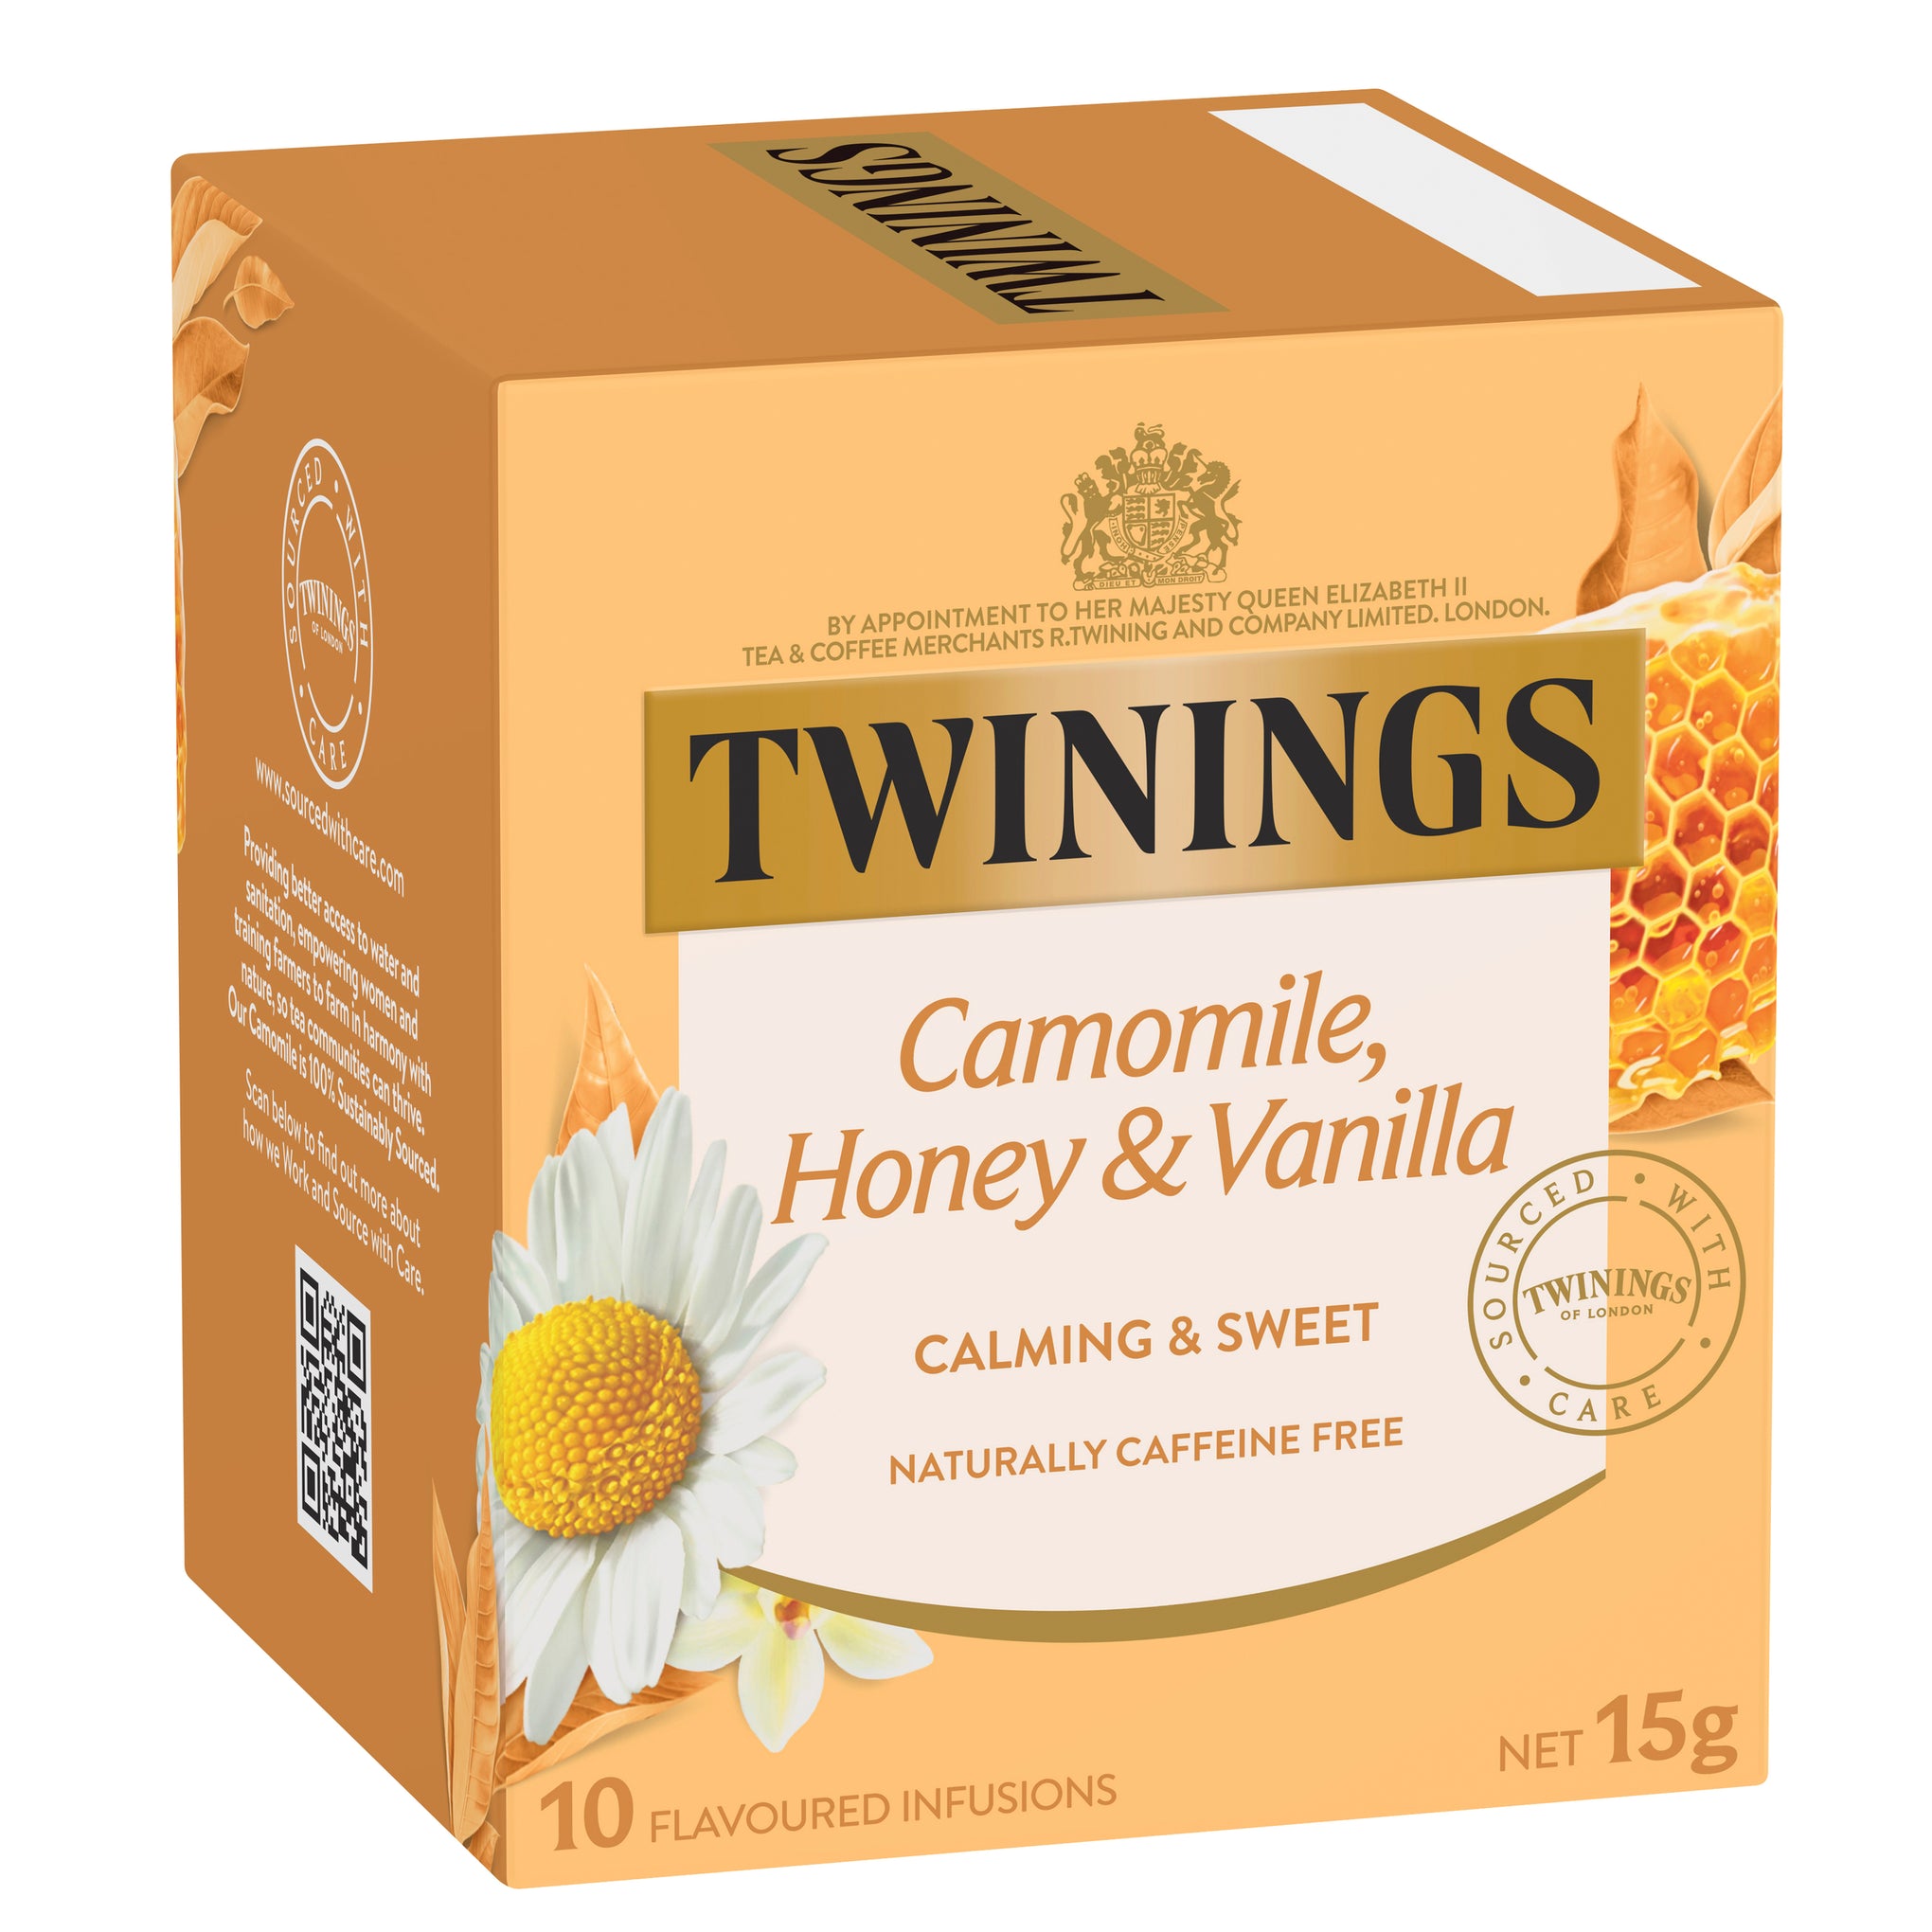 Camomile, Honey & Vanilla